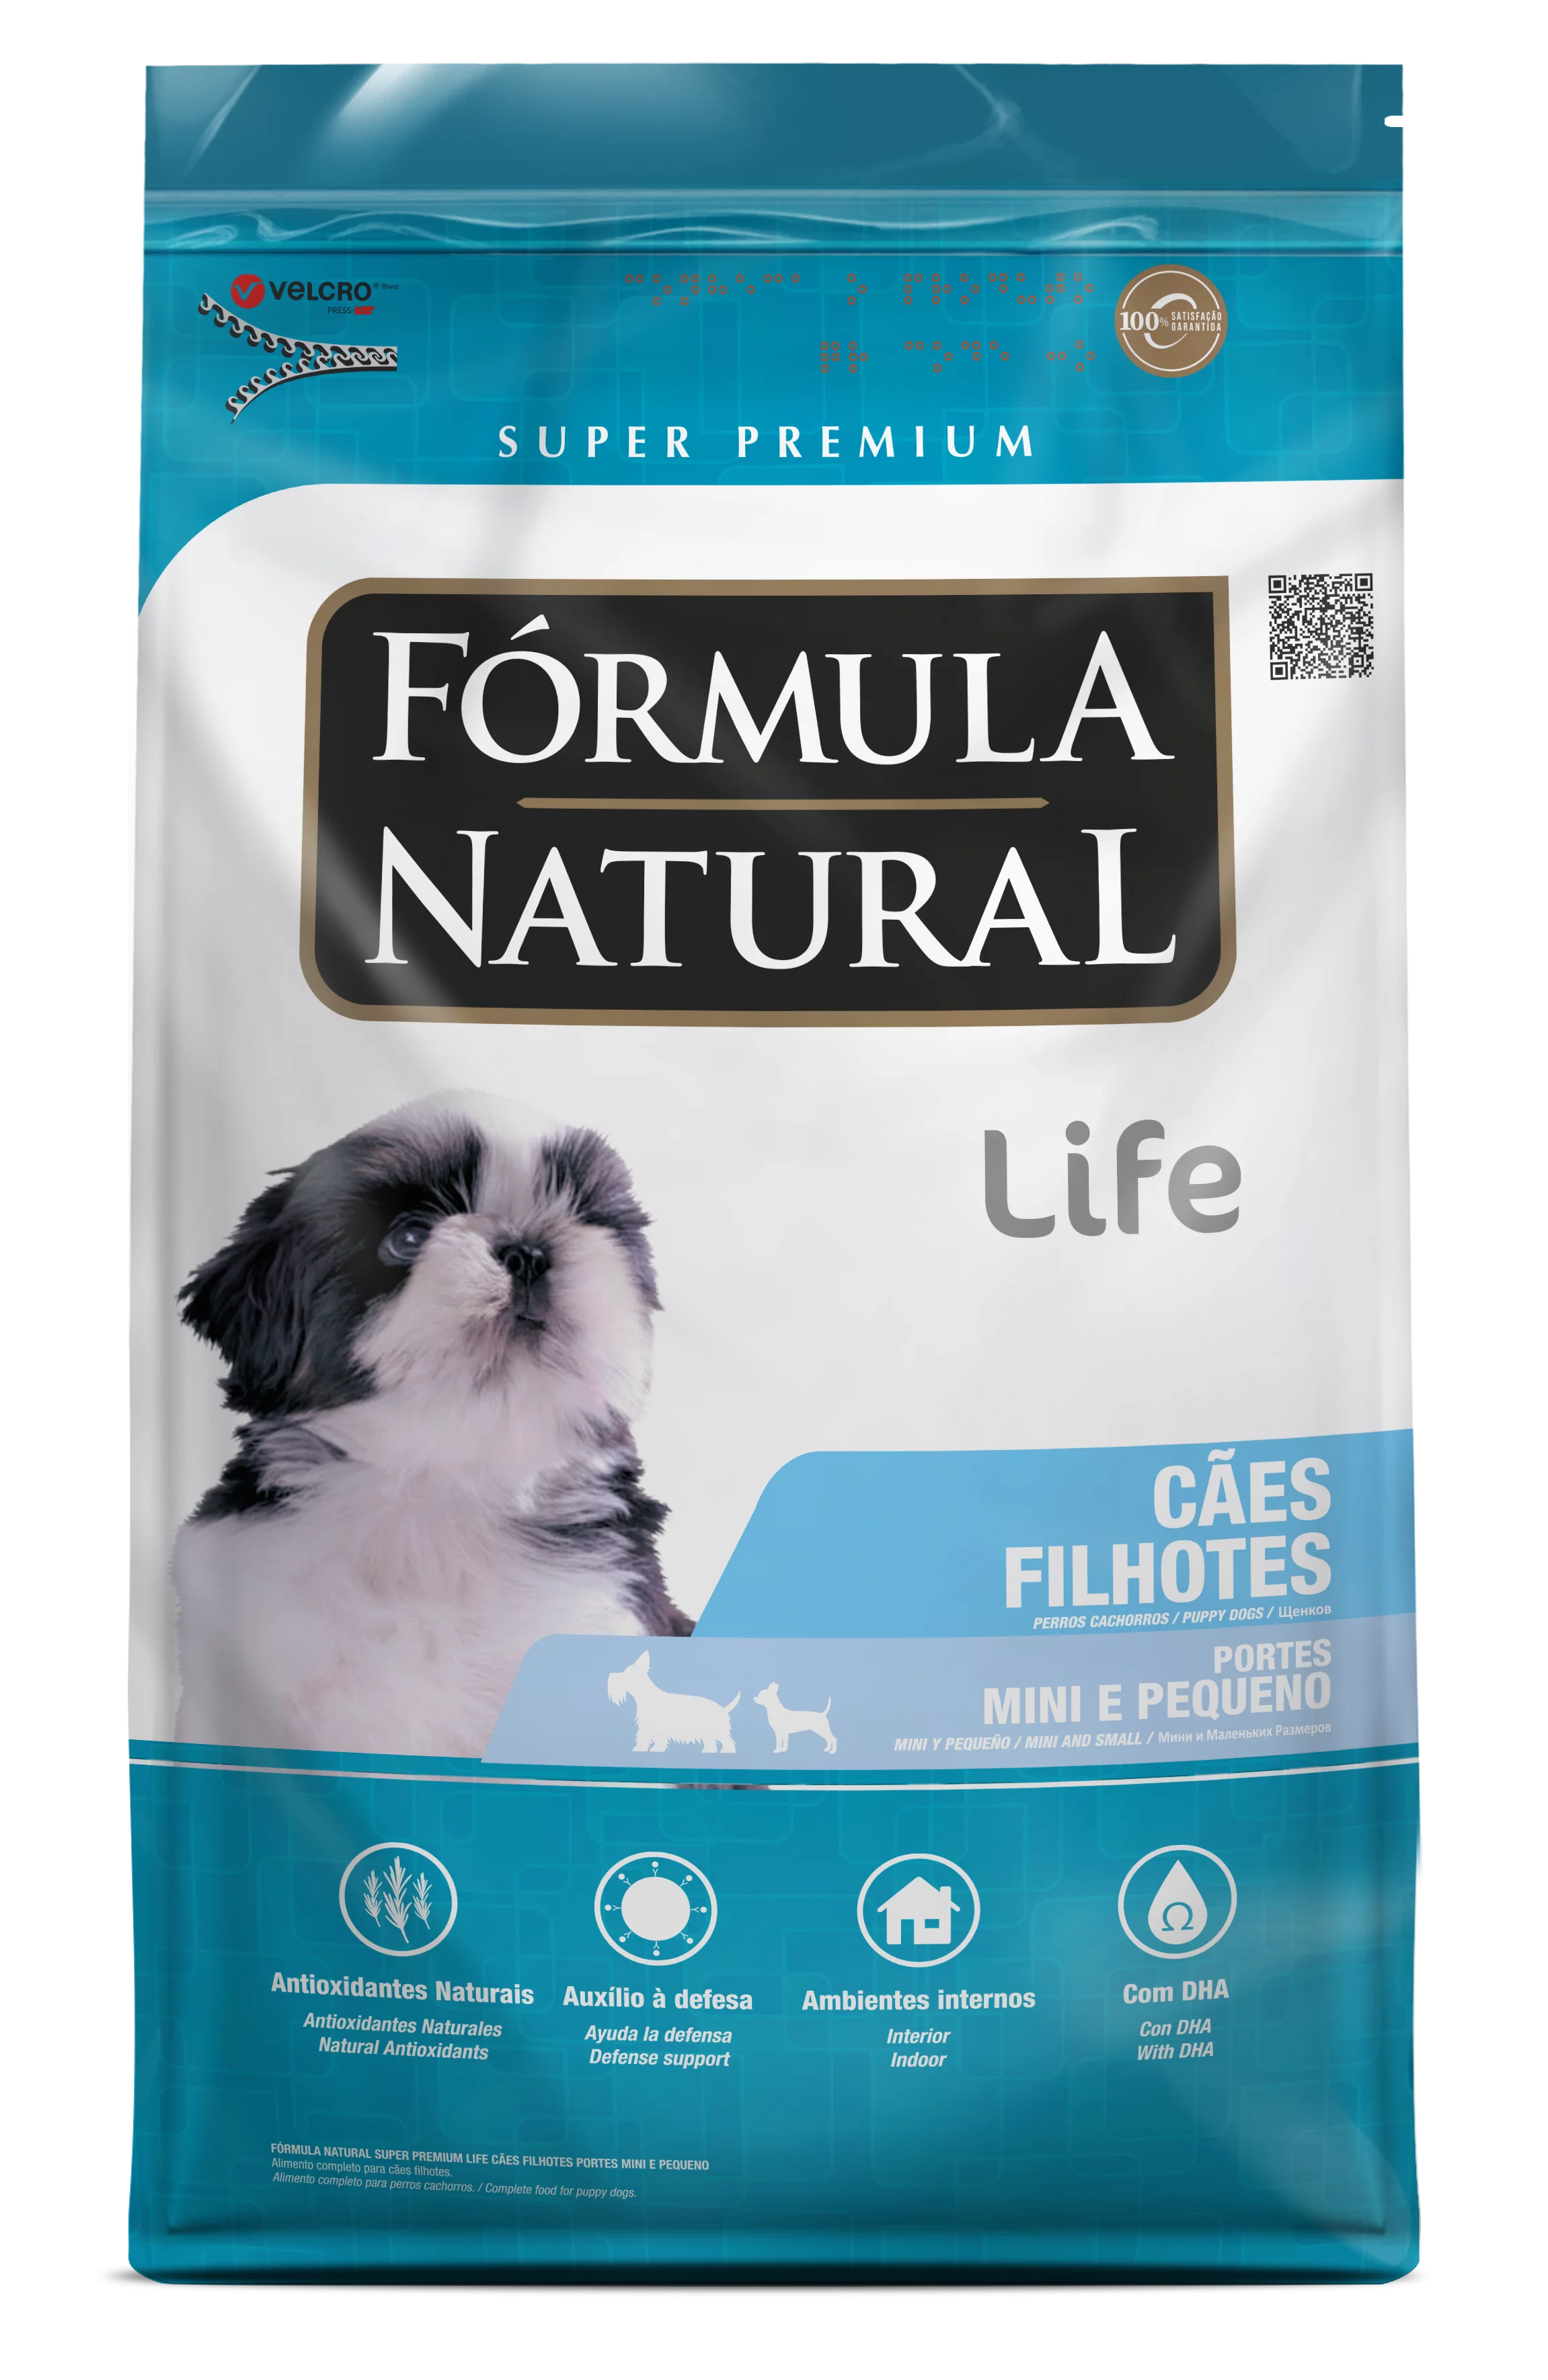 Fórmula Natural Super Premium Life Cães Filhotes Portes Mini e Pequeno